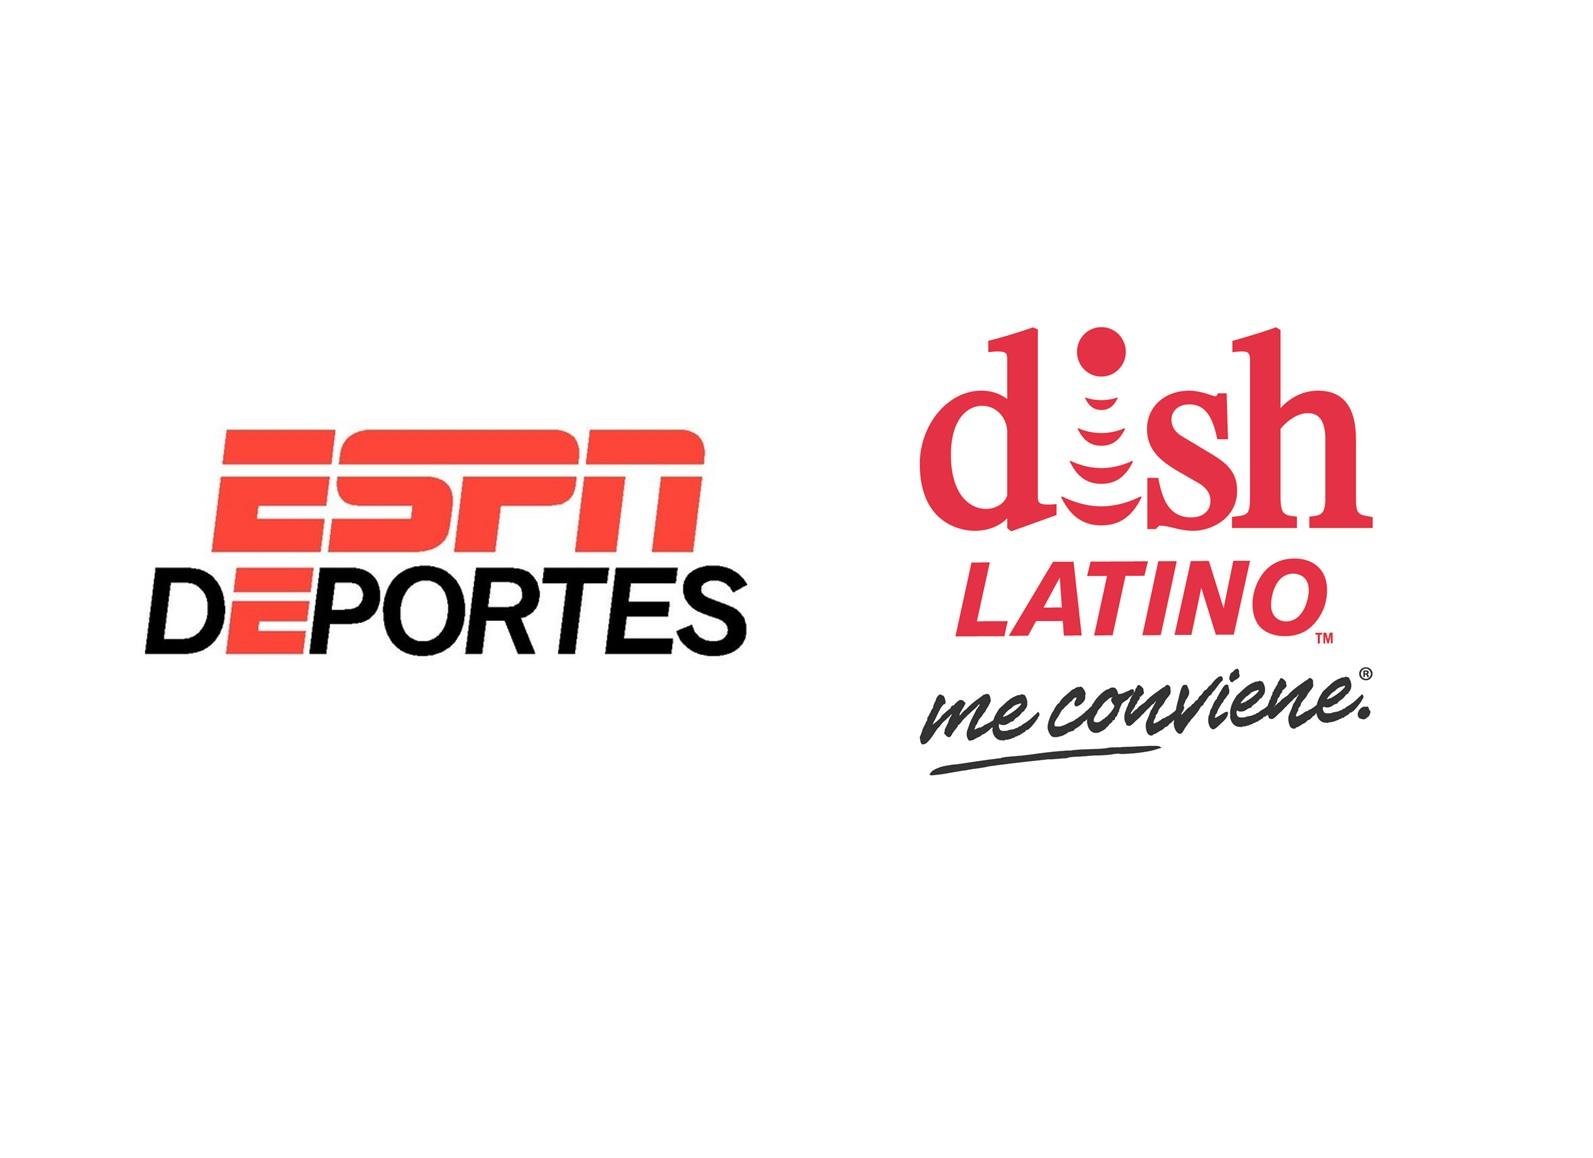 DishLATINO Logo - ESPN Deportes Now Available in HD to DishLATINO Subscribers Ahead